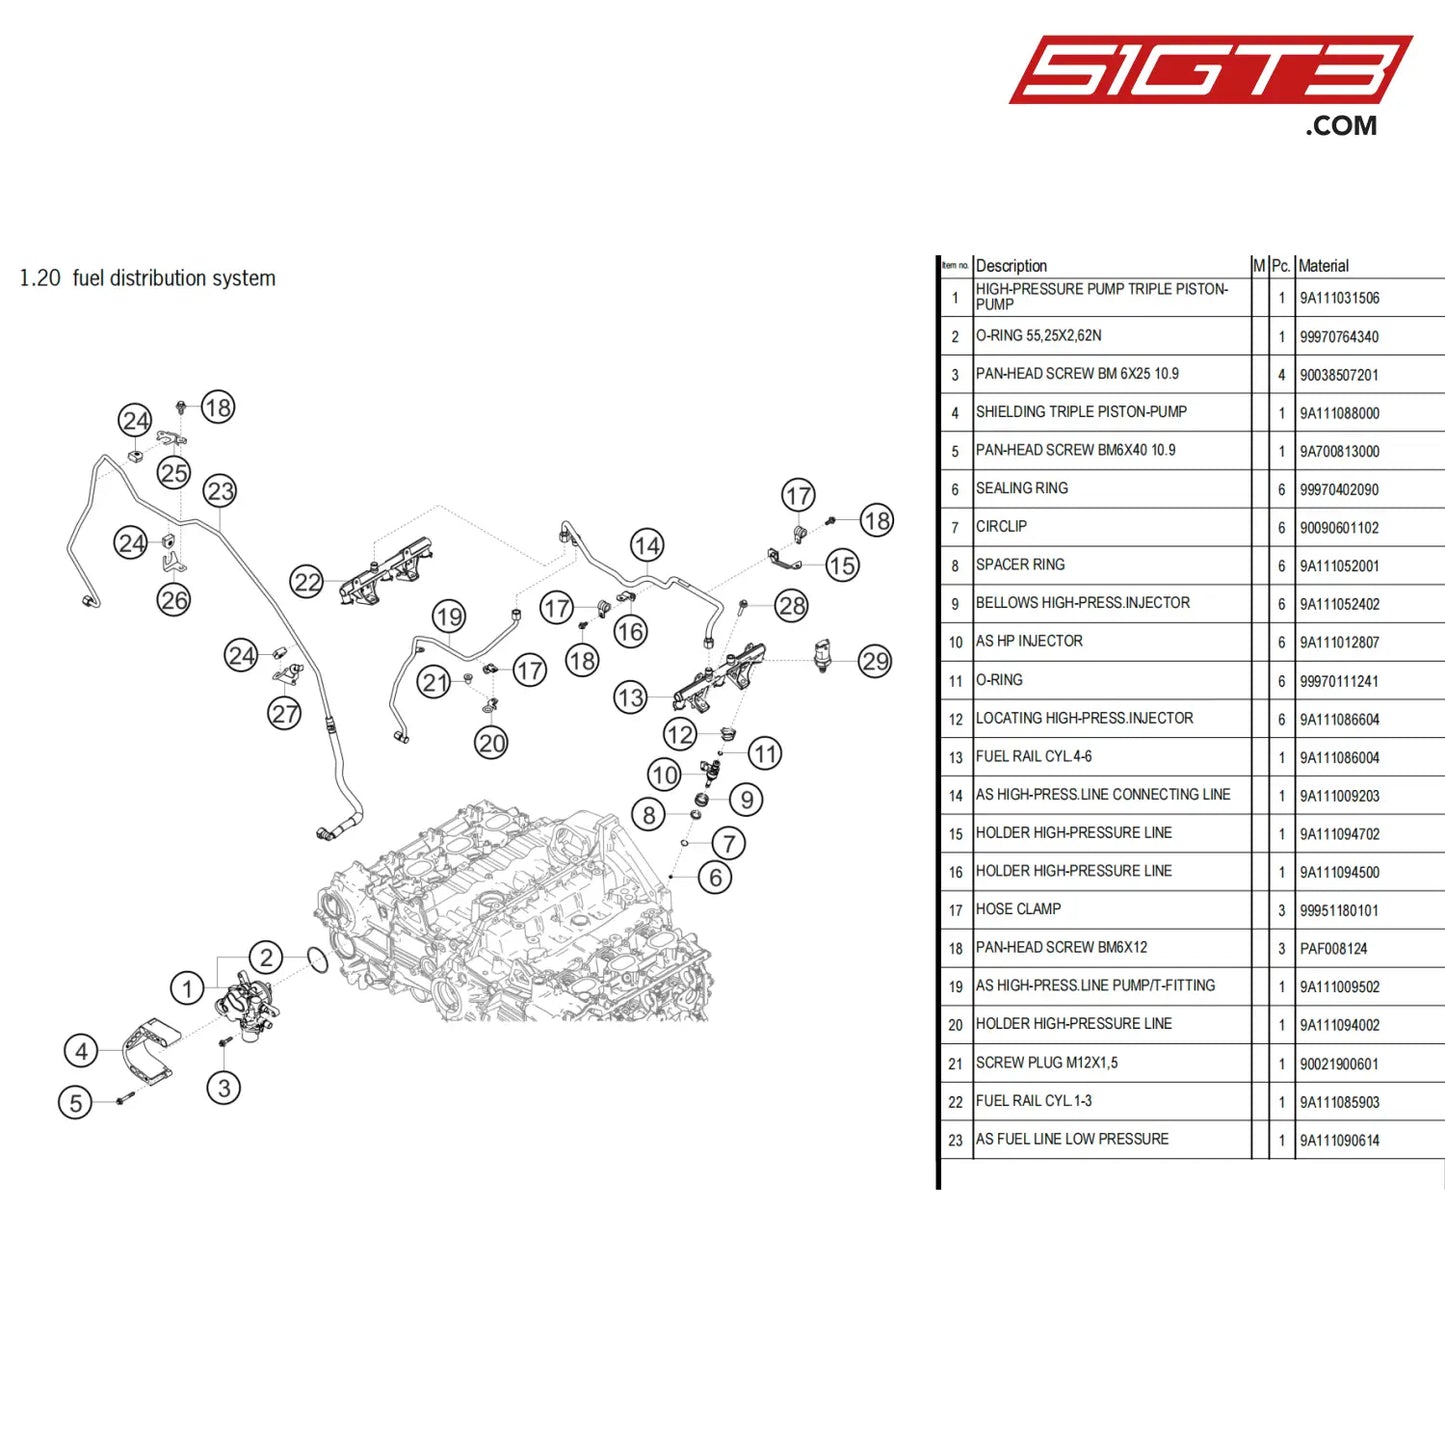 Locating High-Press.injector - 9A111086604 [Porsche 718 Cayman Gt4 Clubsport] Fuel Distribution